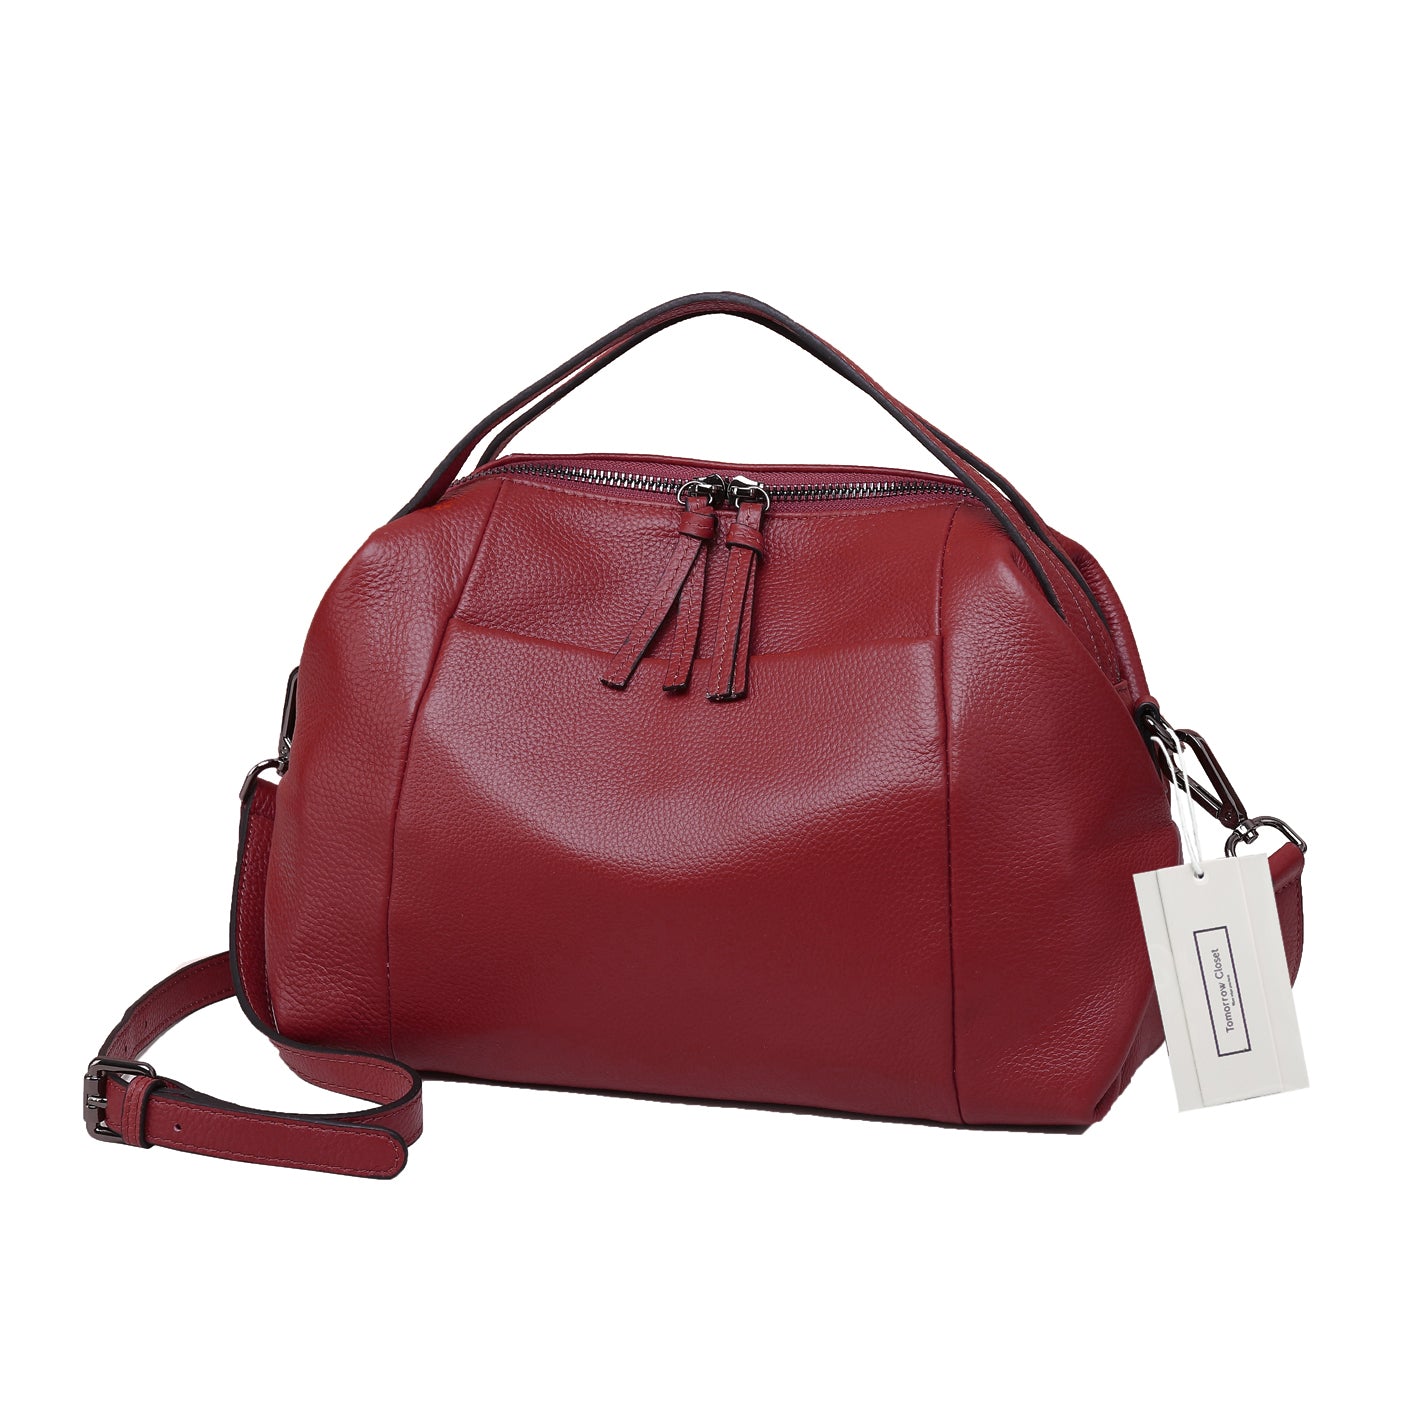 Women's genuine cowhide leather handbag Alana design